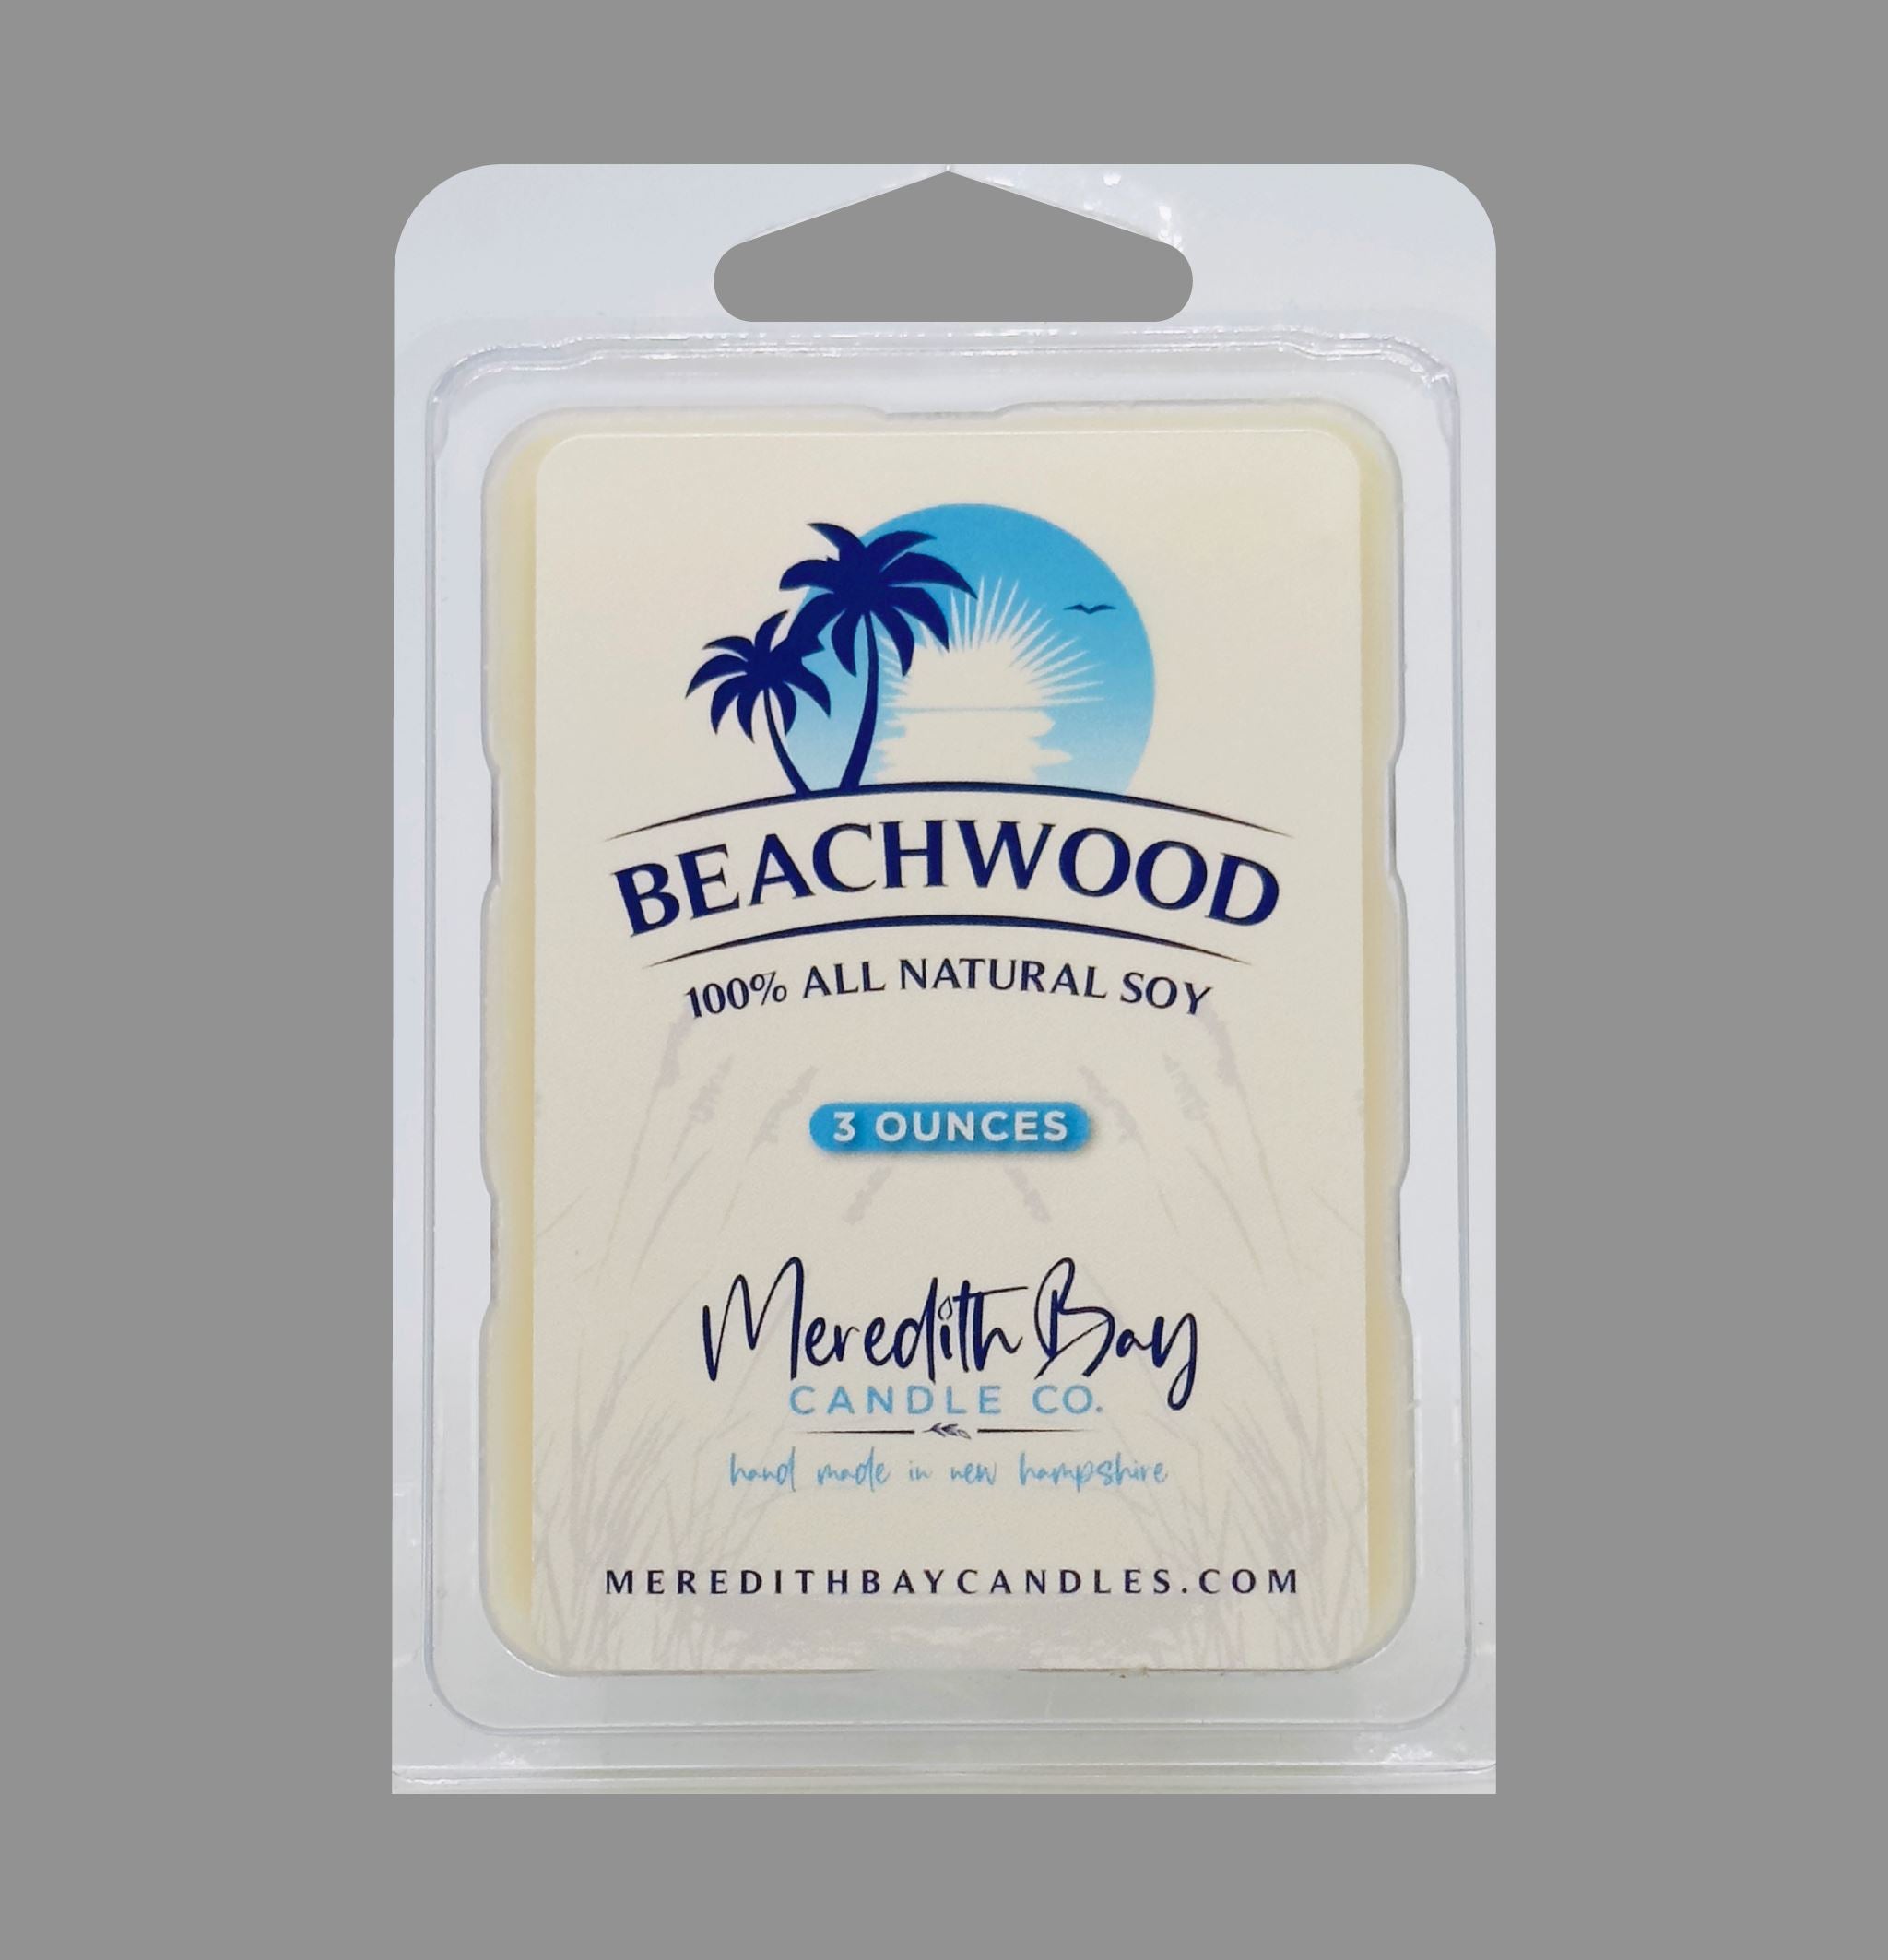 Beachwood Wax Melt Wax Melt Meredith Bay Candle Co 